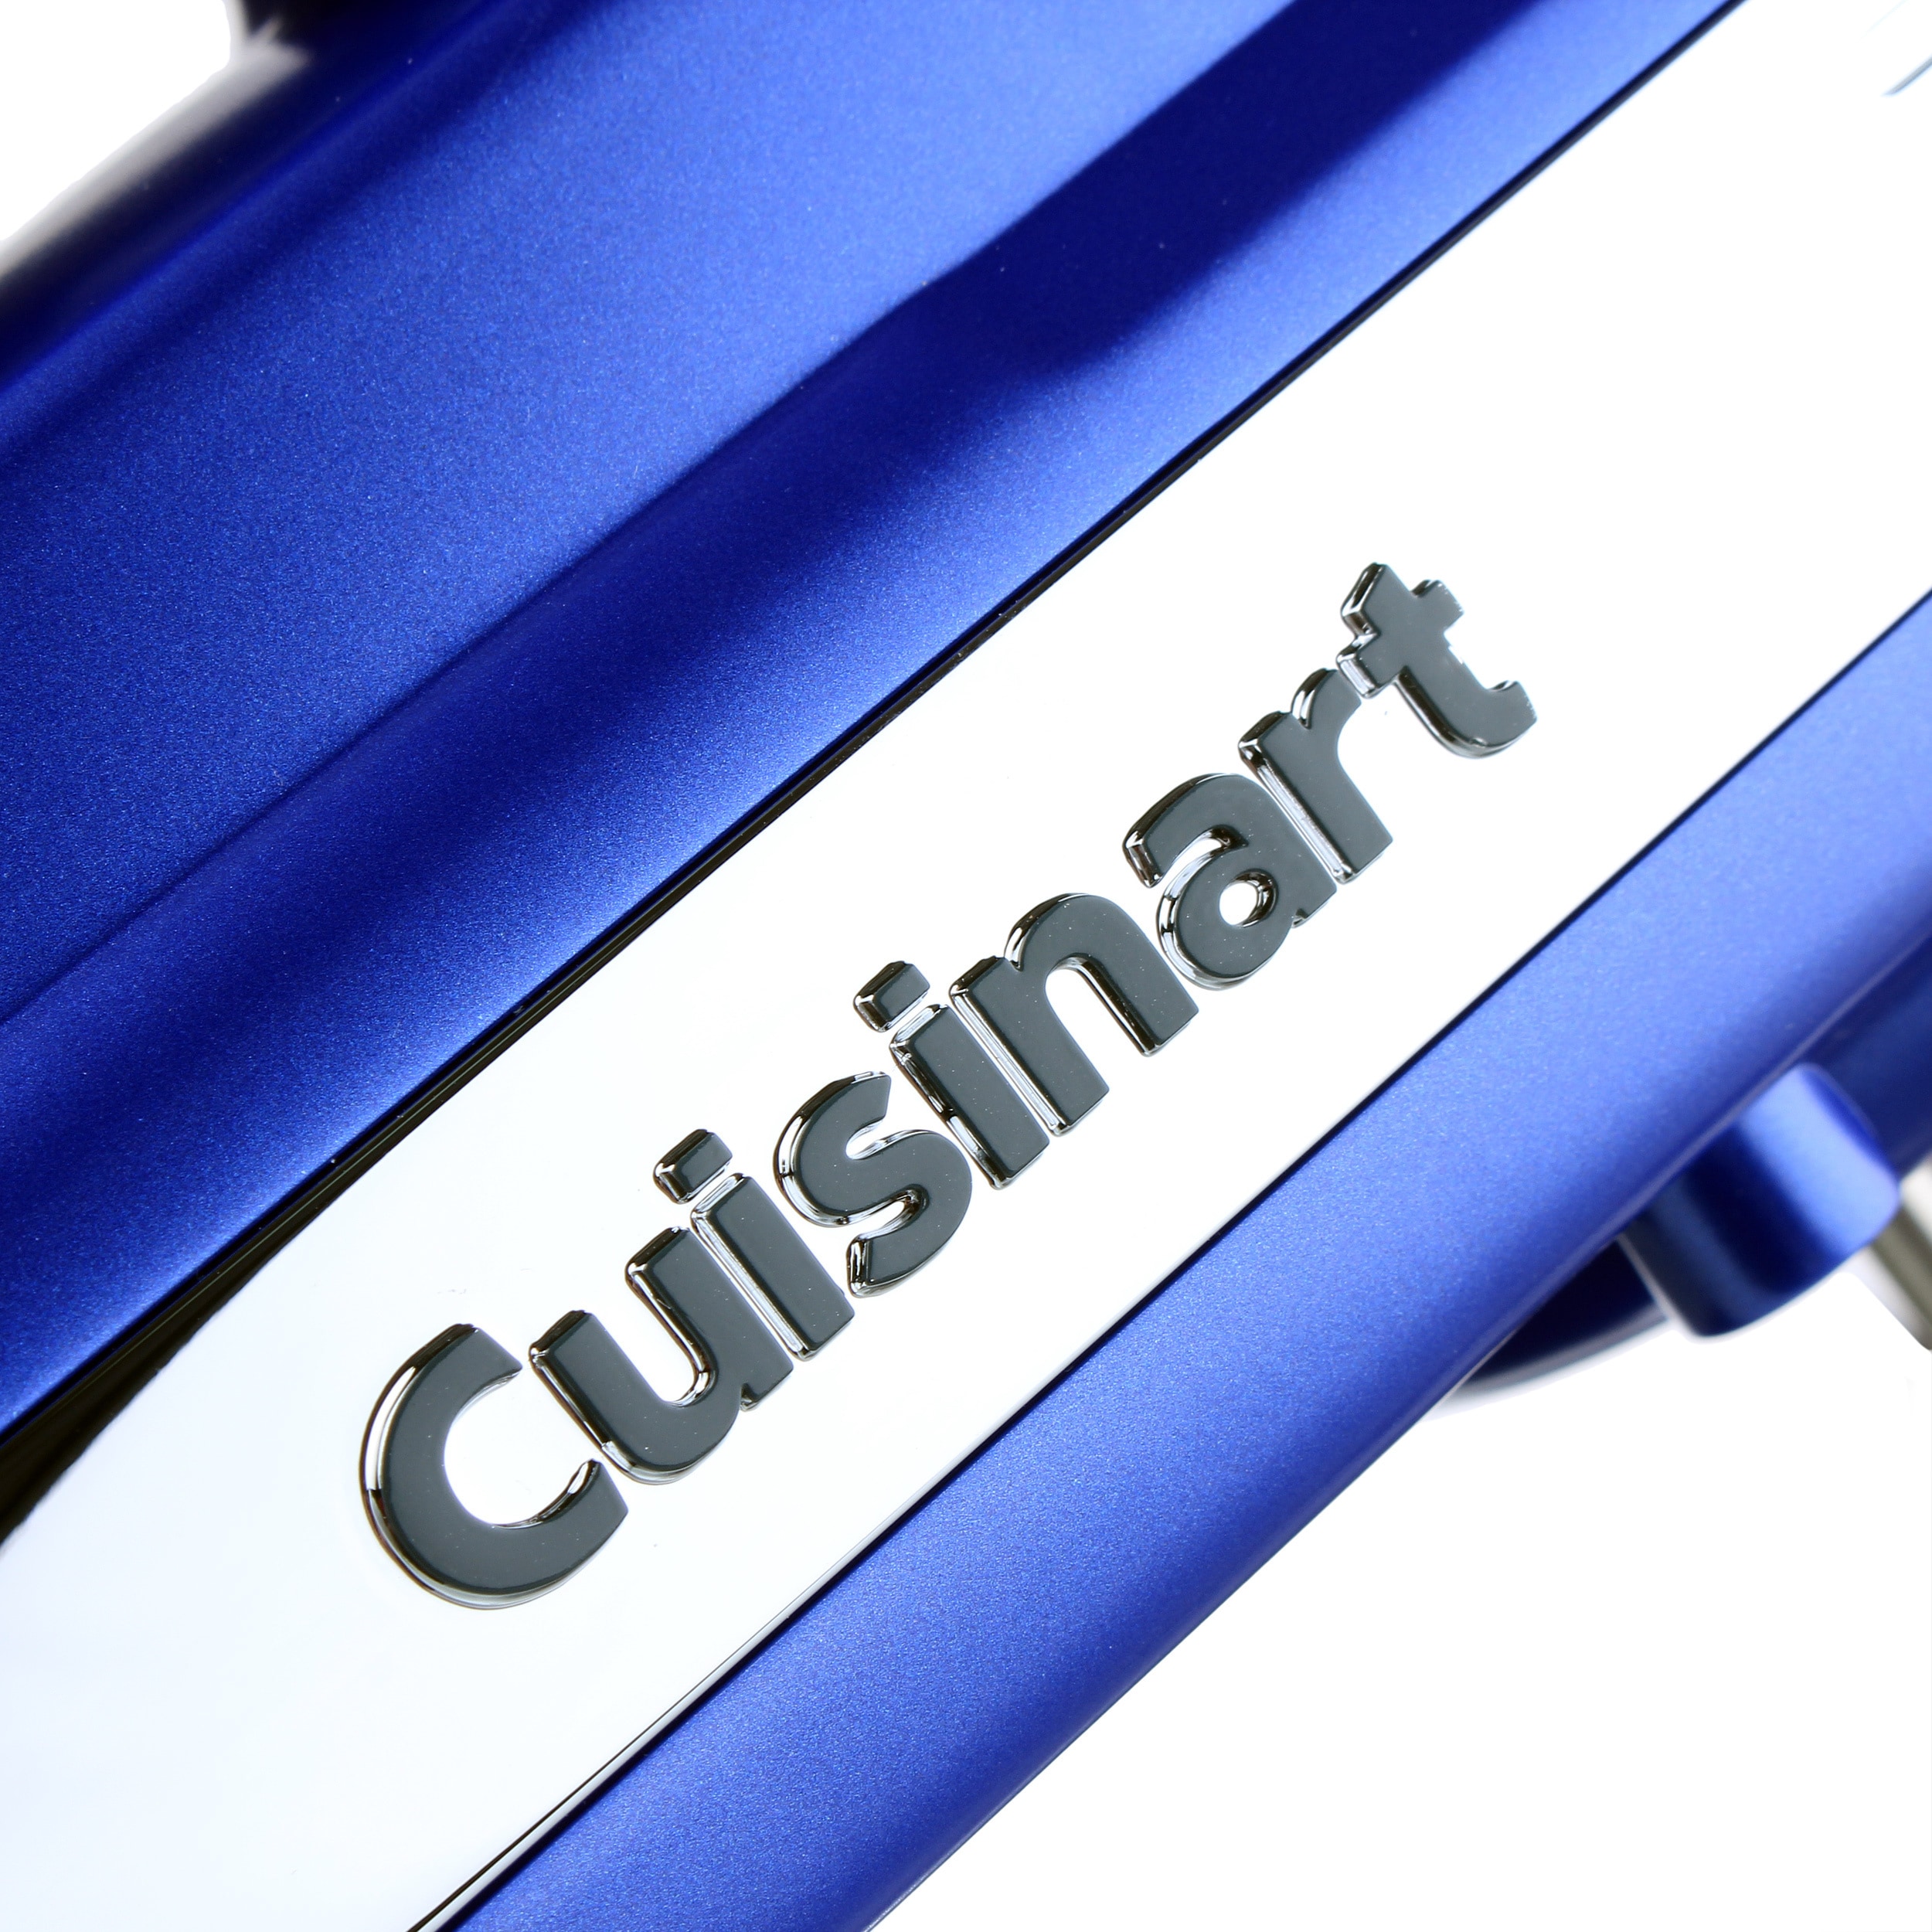 Cuisinart HM-50BM Power Advantage 5-Speed Hand Mixer, Iced Blue Mint 